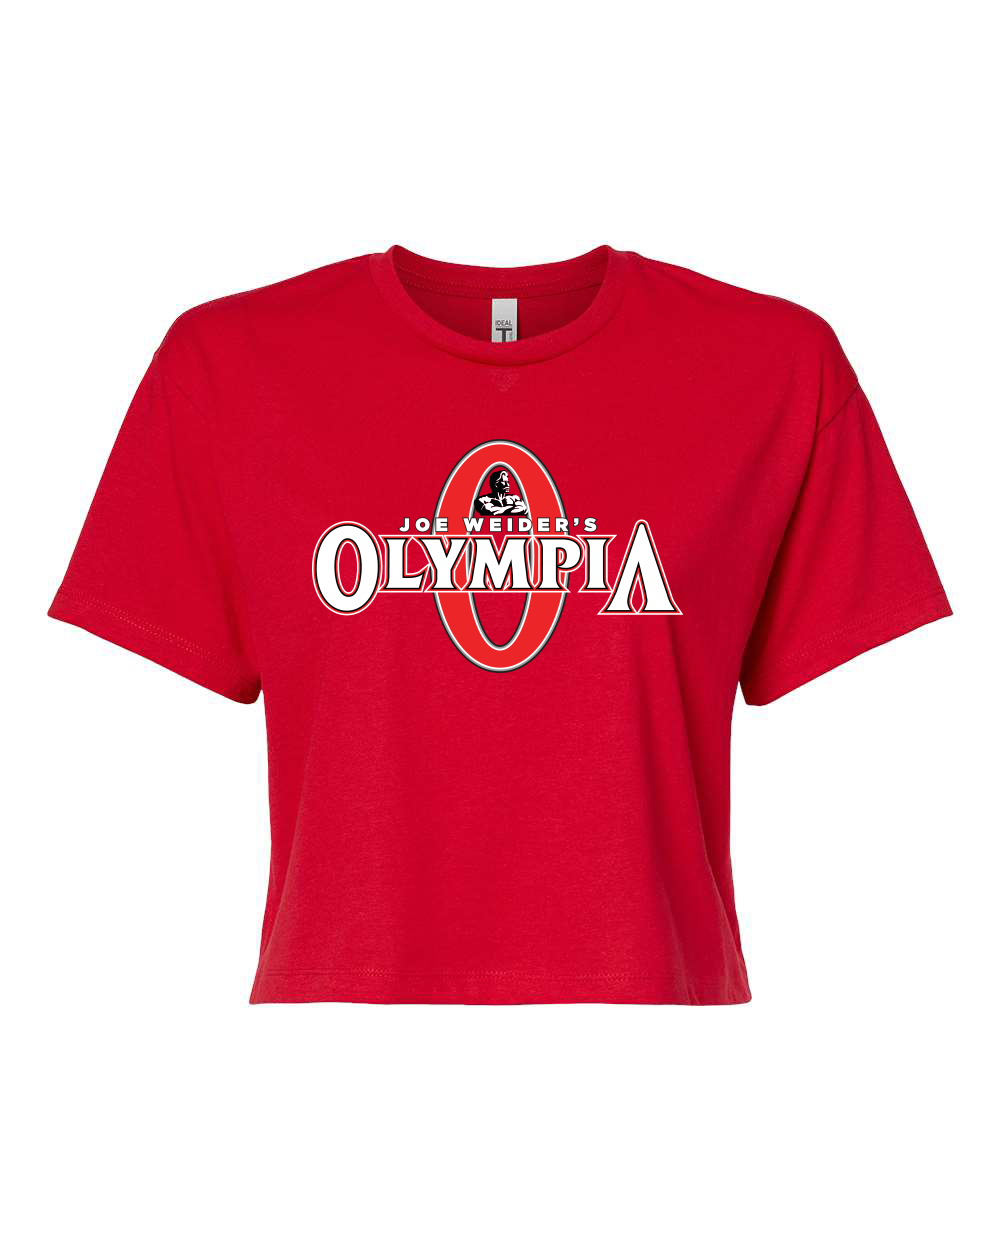 Olympia Red Crop Top original logo